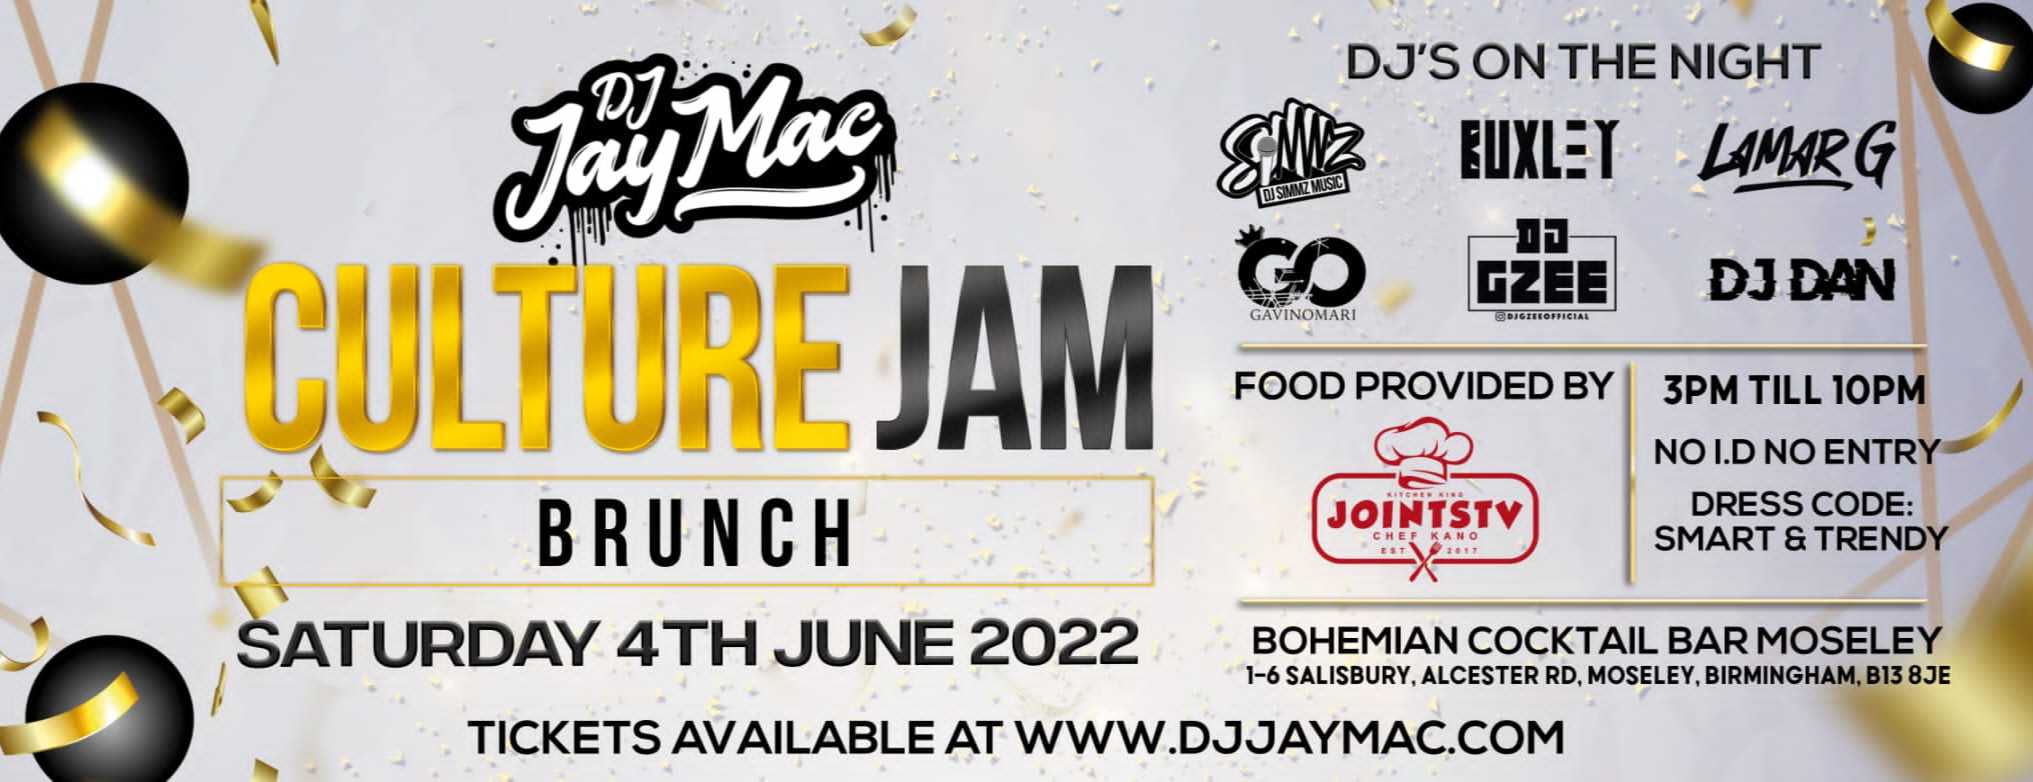 DJ Jay Mac's Culture Jam Brunch